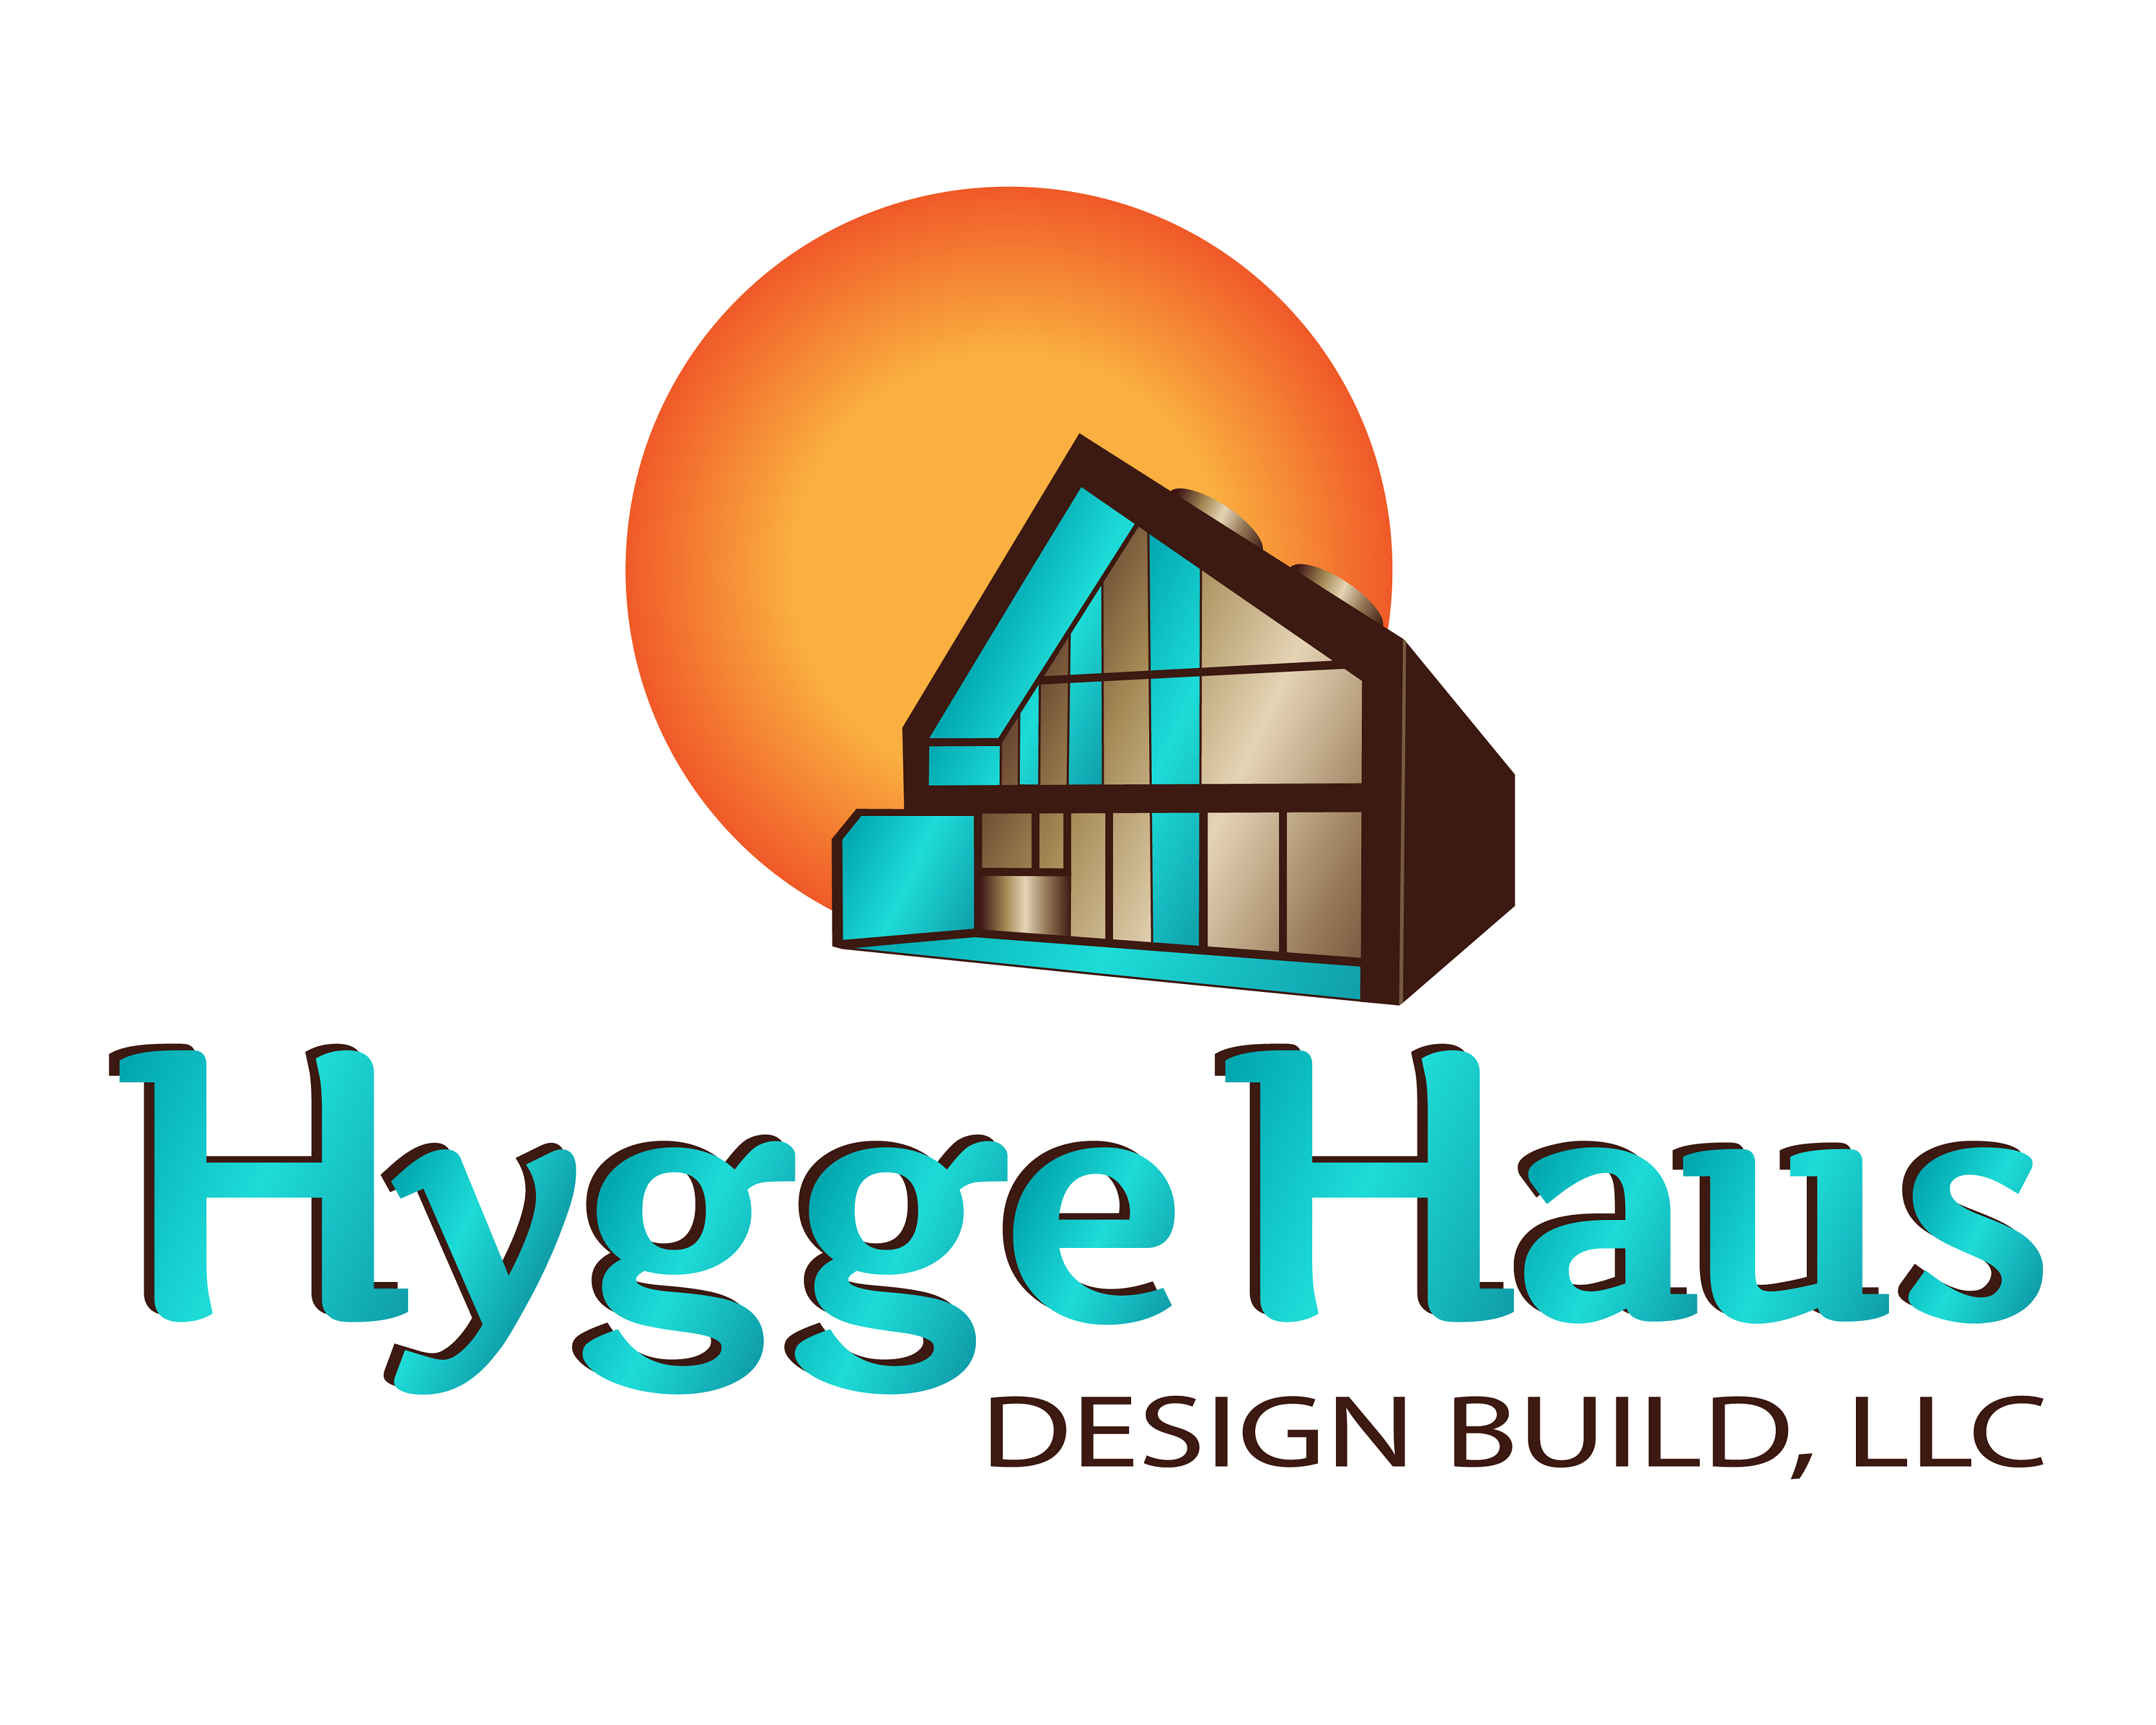 Hygge Haus Design Build, LLC company logo